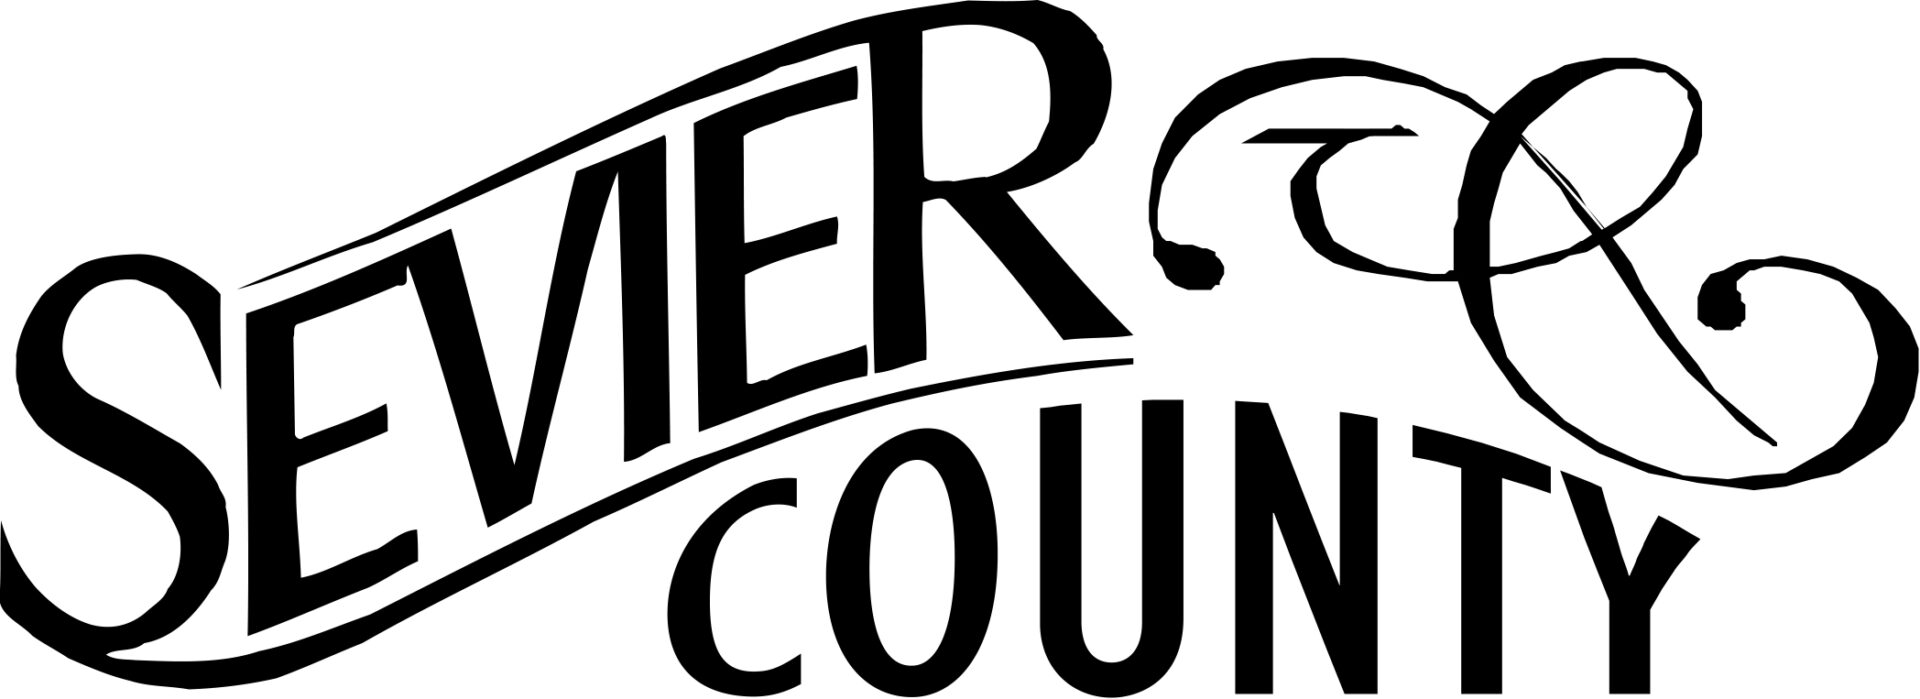 Sevier-County-Logo